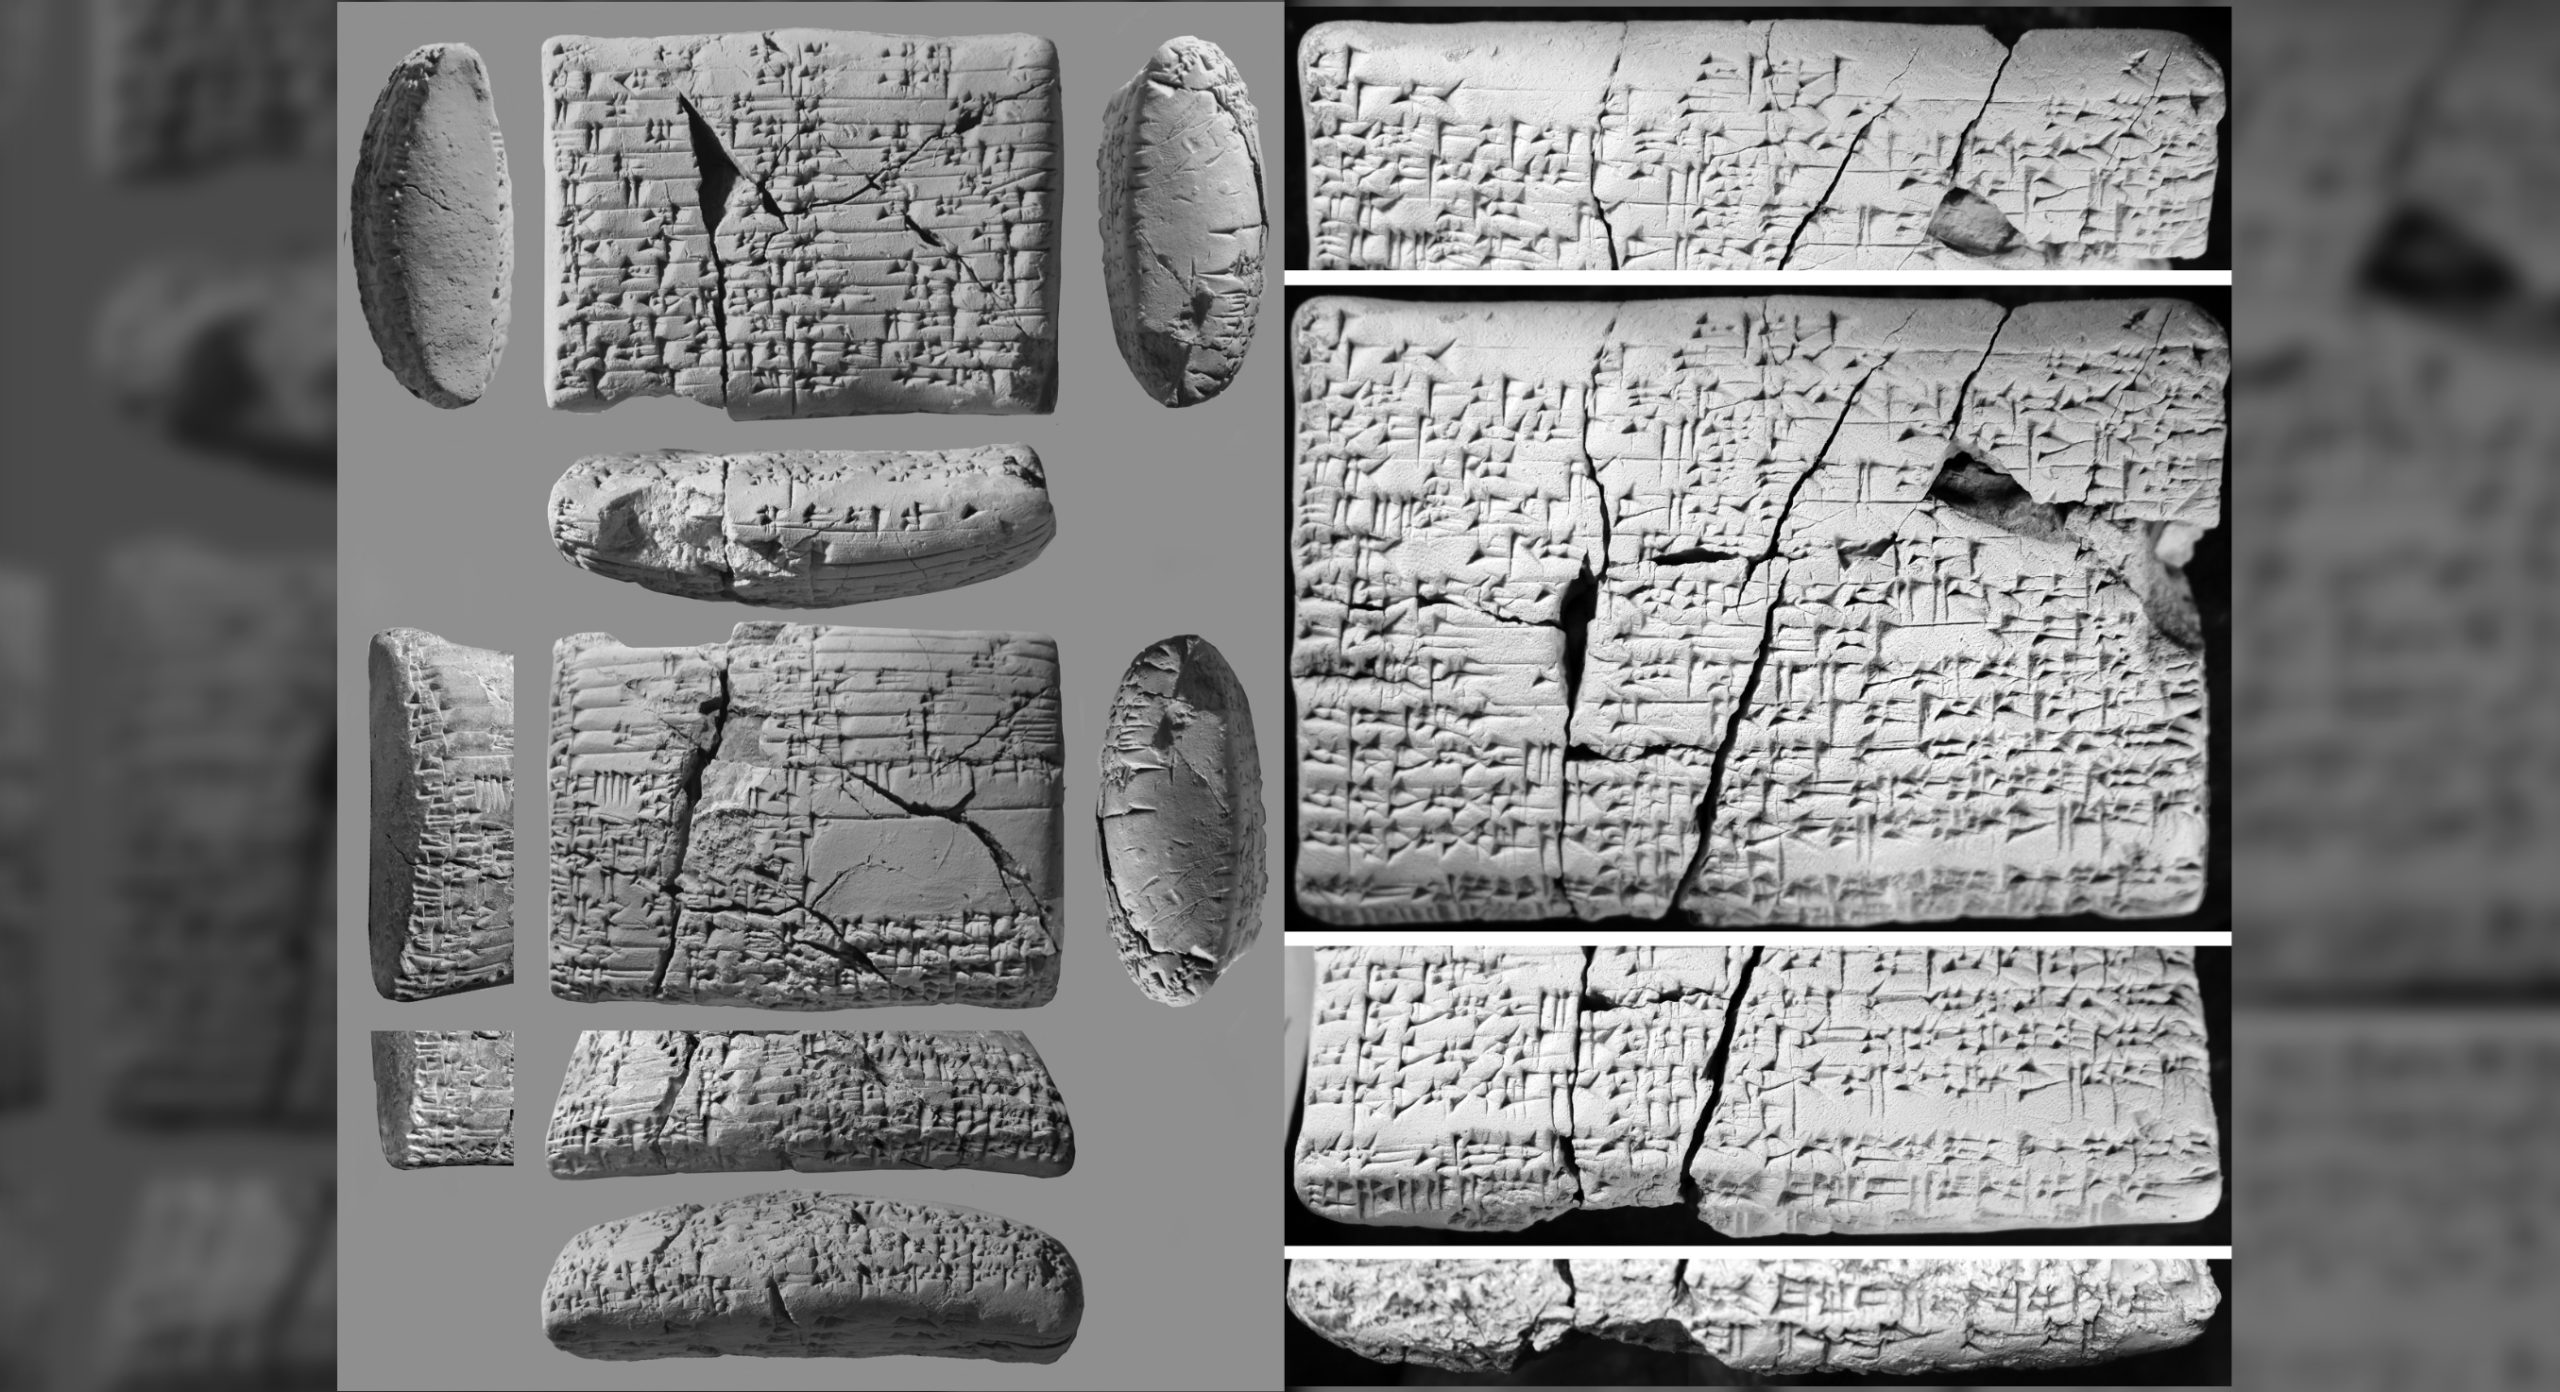 4,000-year-old lost ancient language. Image Credit: Courtesy David I. Owen.